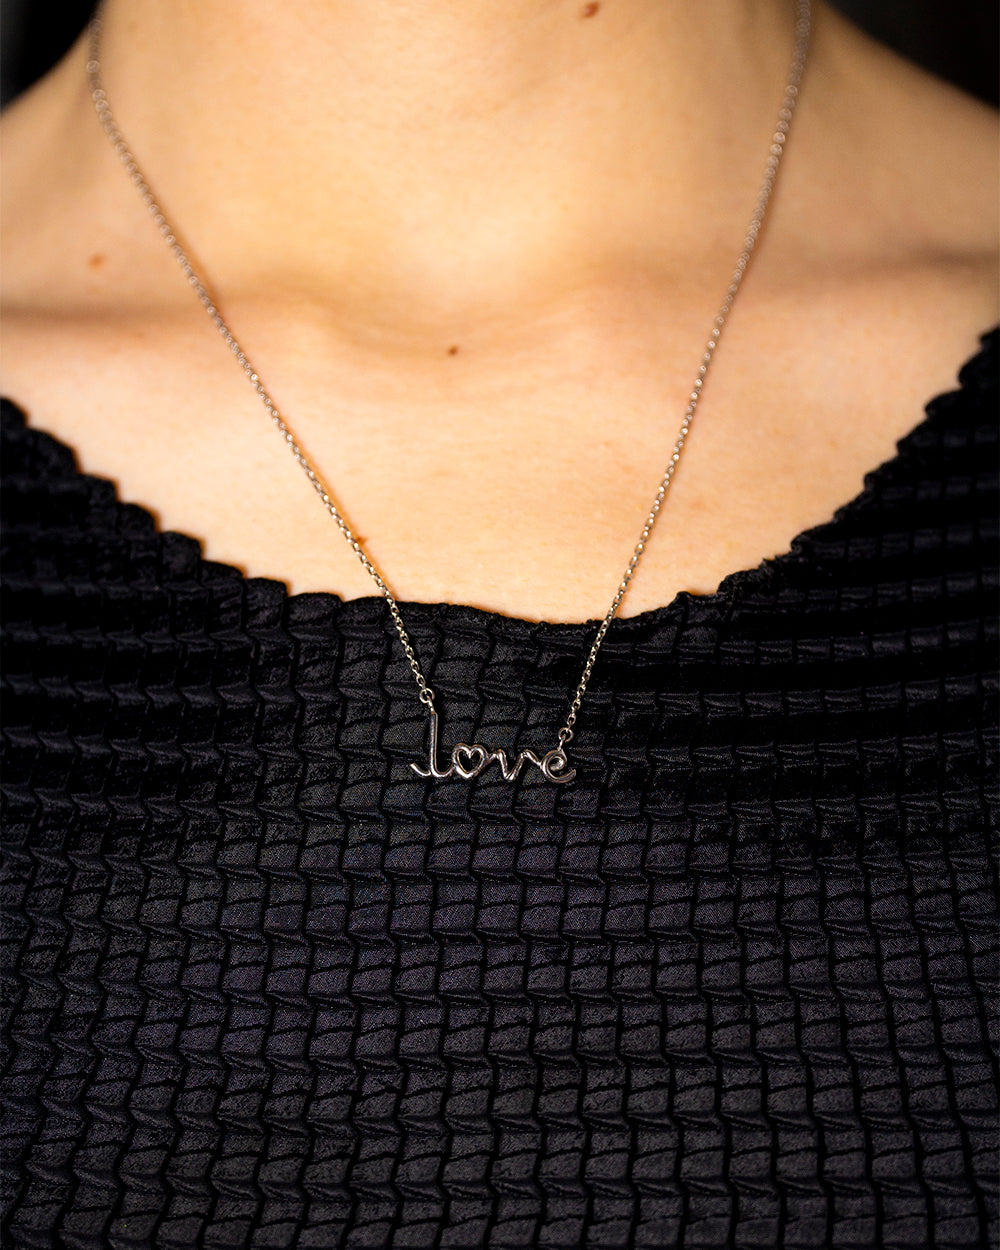 Love Written word pendant necklace 18k white gold by Solange Azagury-Partridge on neck